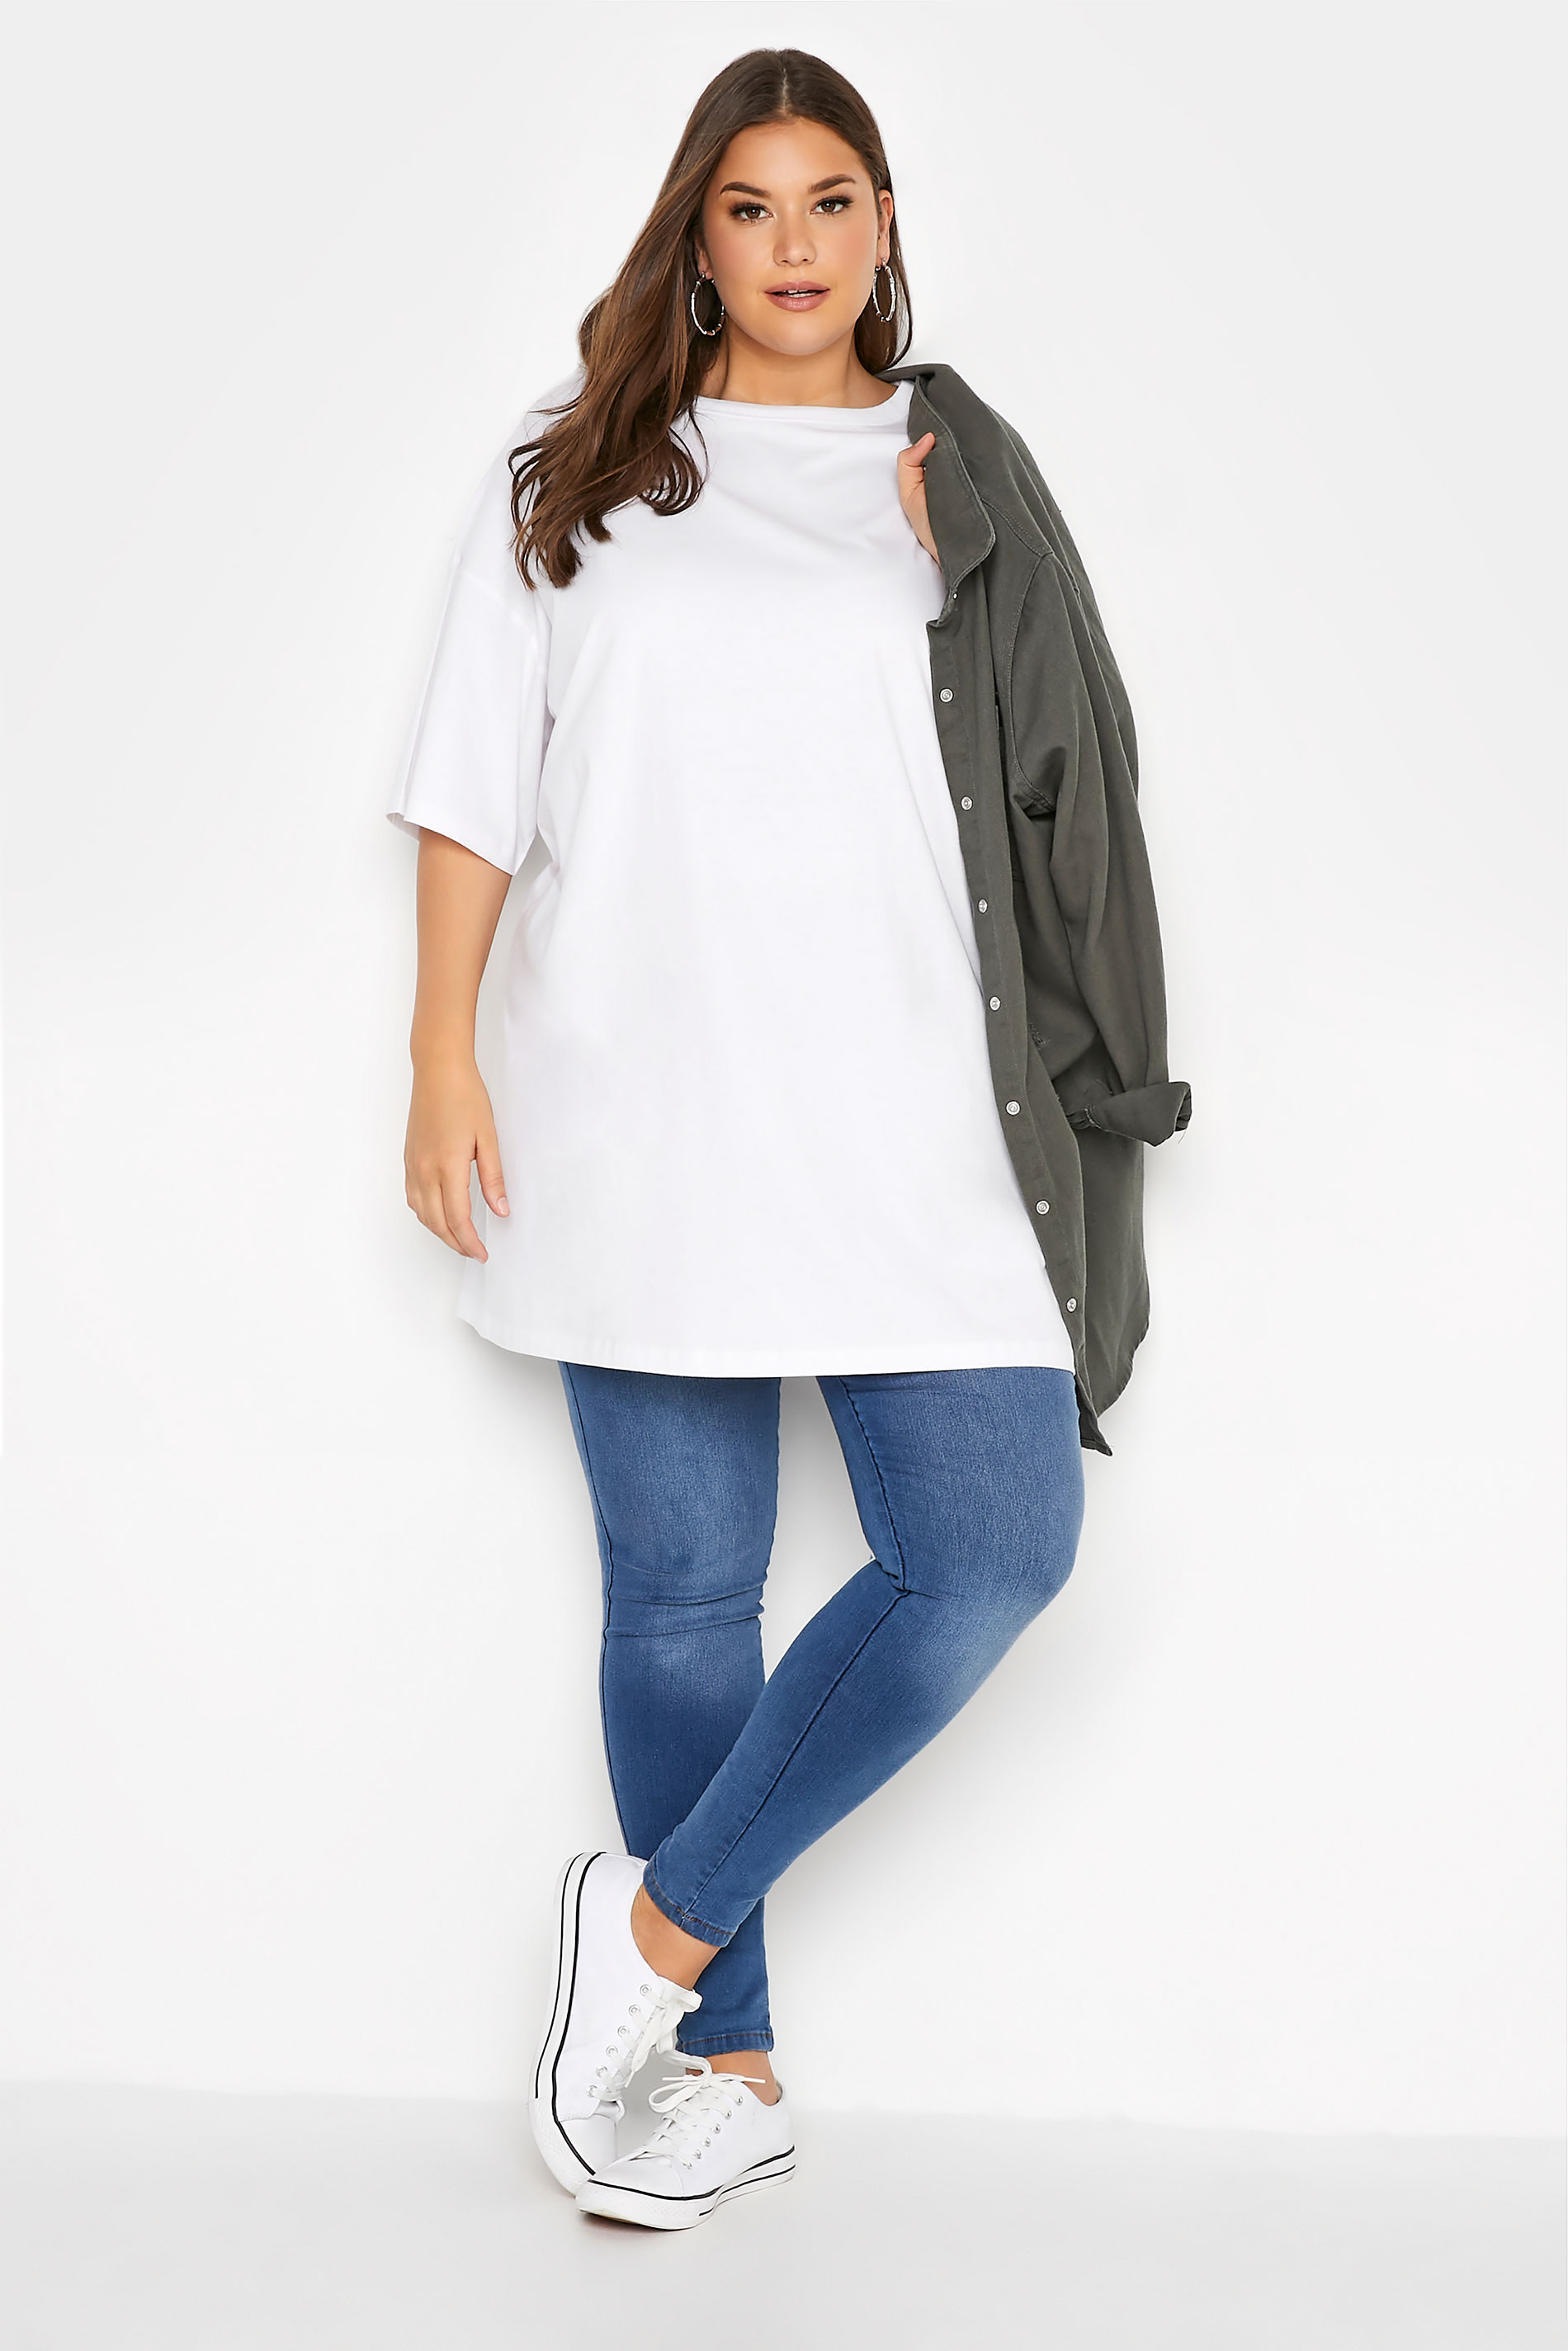 Grande taille  Tops Grande taille  T-Shirts | T-Shirt Blanc en Jersey Design Oversize - NX13858